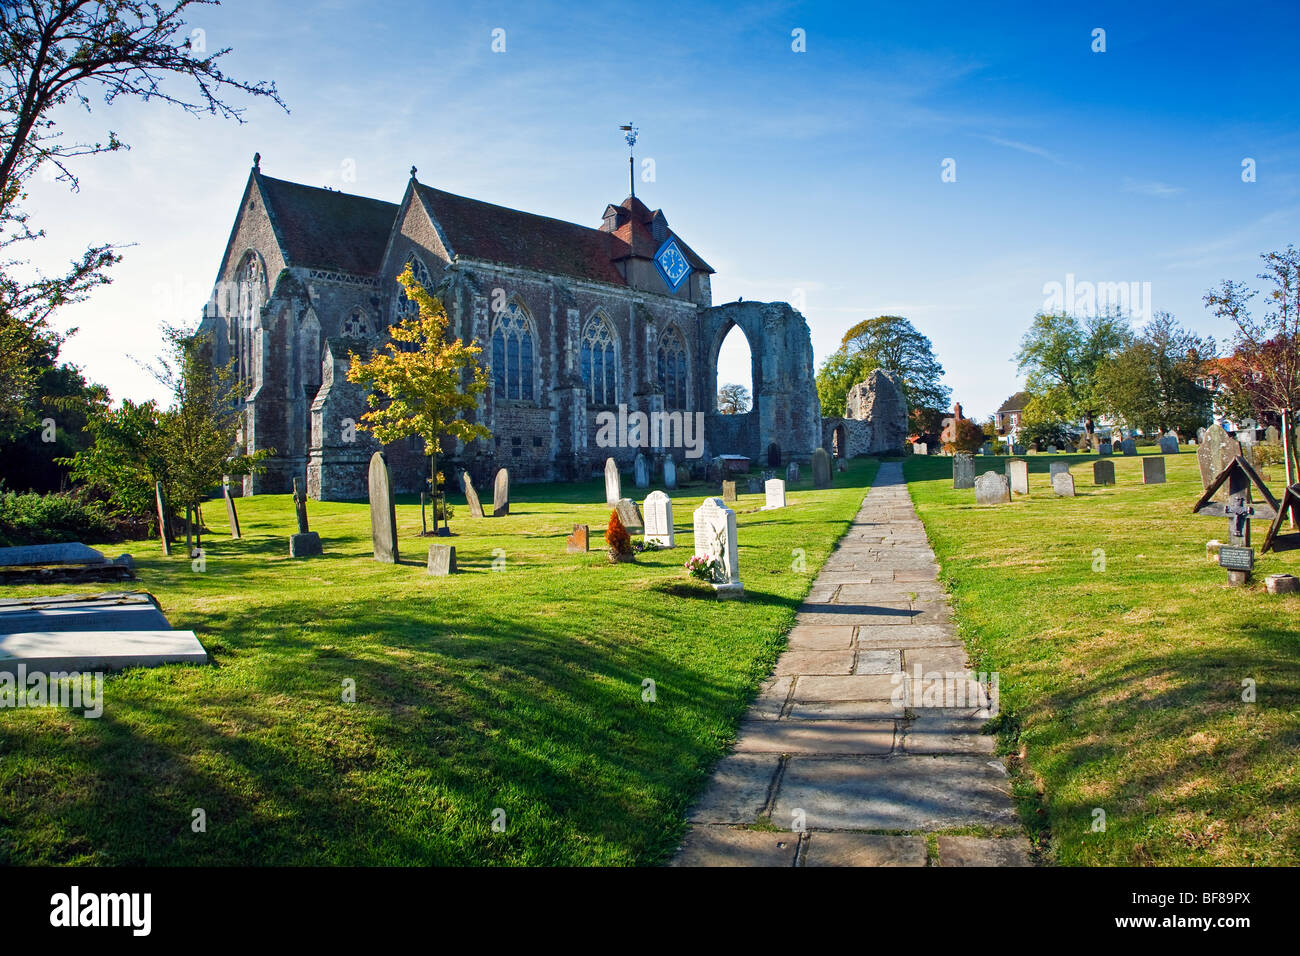 Saint Thomas church, Winchelsea, East Sussex, England, UK 2009 Stock Photo